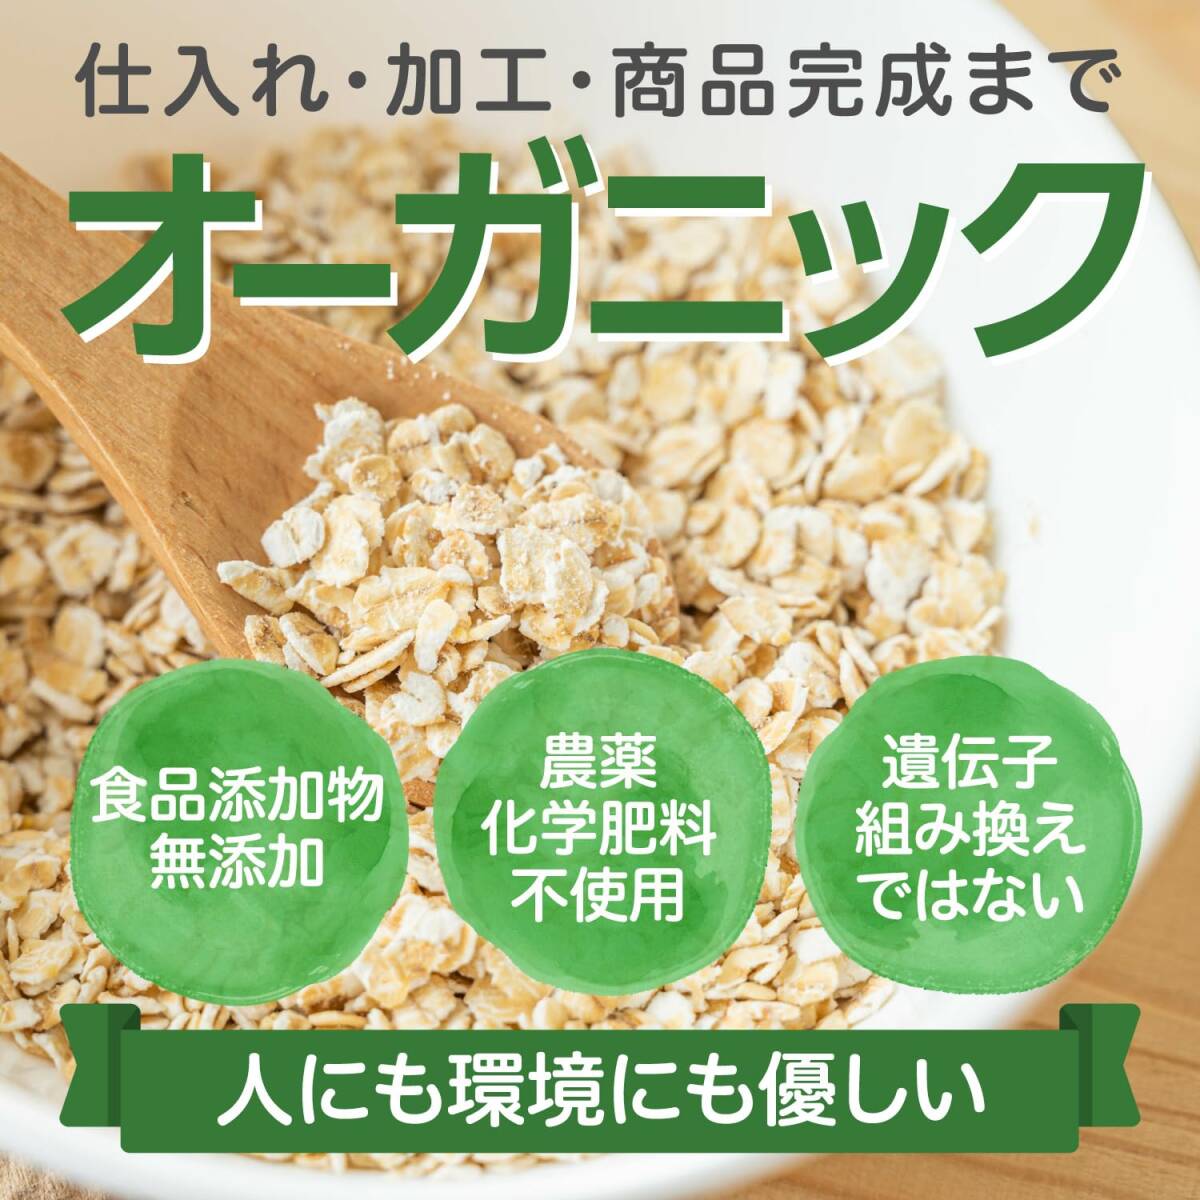  Japan food manufacture day meal organic pure auto mi-ru330g×4 piece 